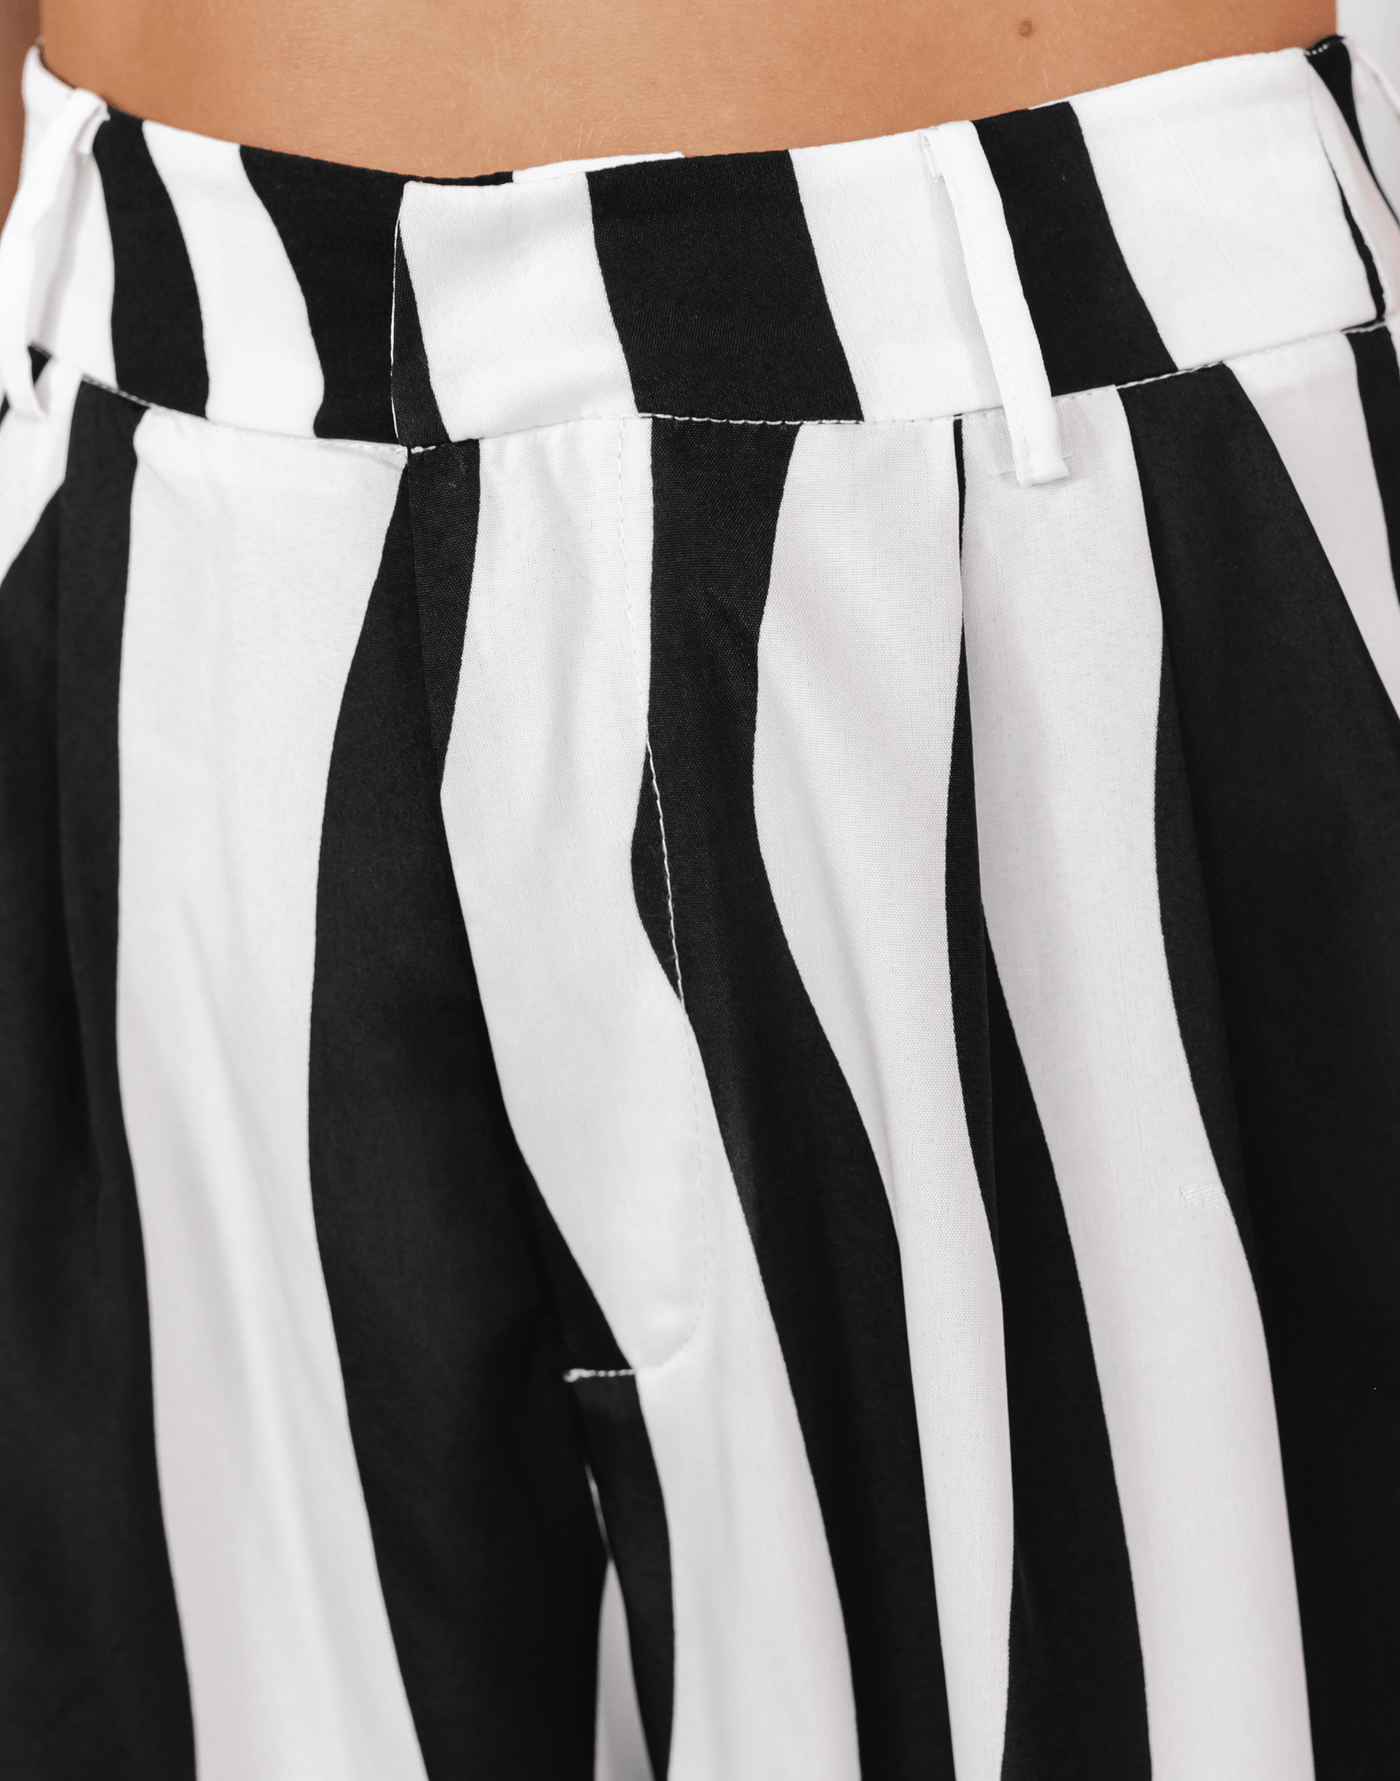 Zita Pants- Black and White Abstract Print High Waisted Pants - Women's Pants - Charcoal Clothing